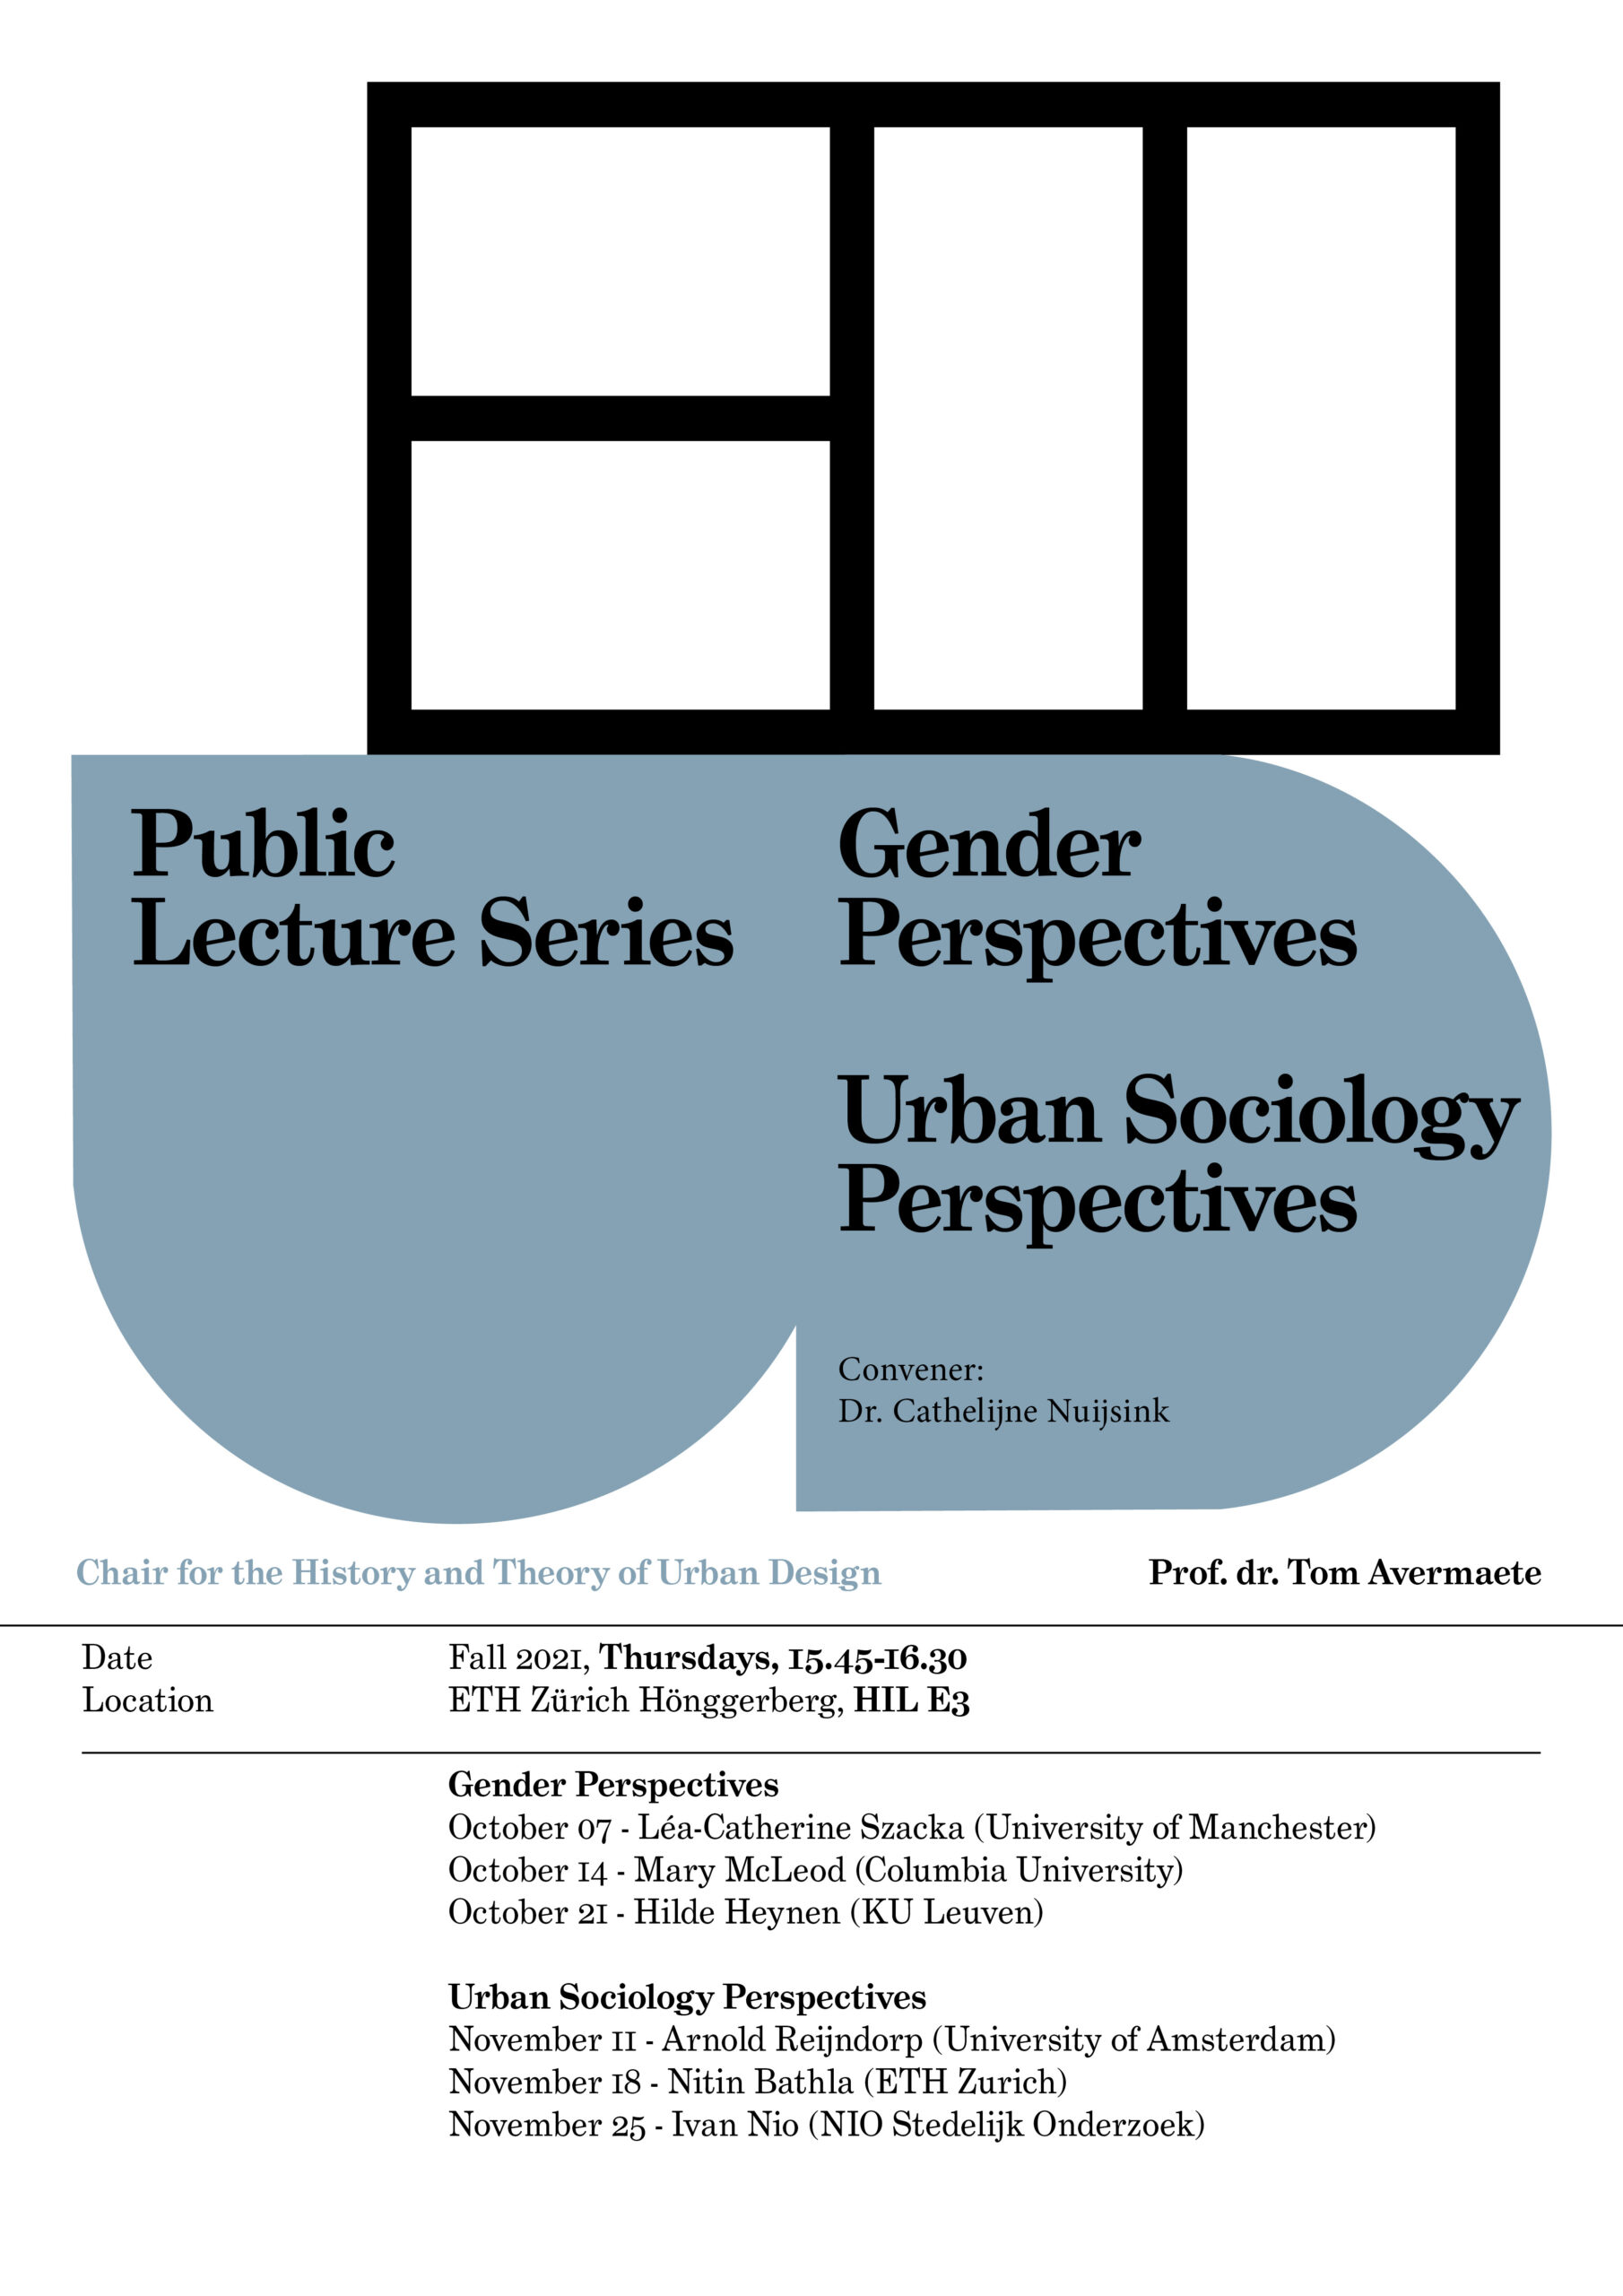 Gender Perspectives | Urban Sociology Perspectives